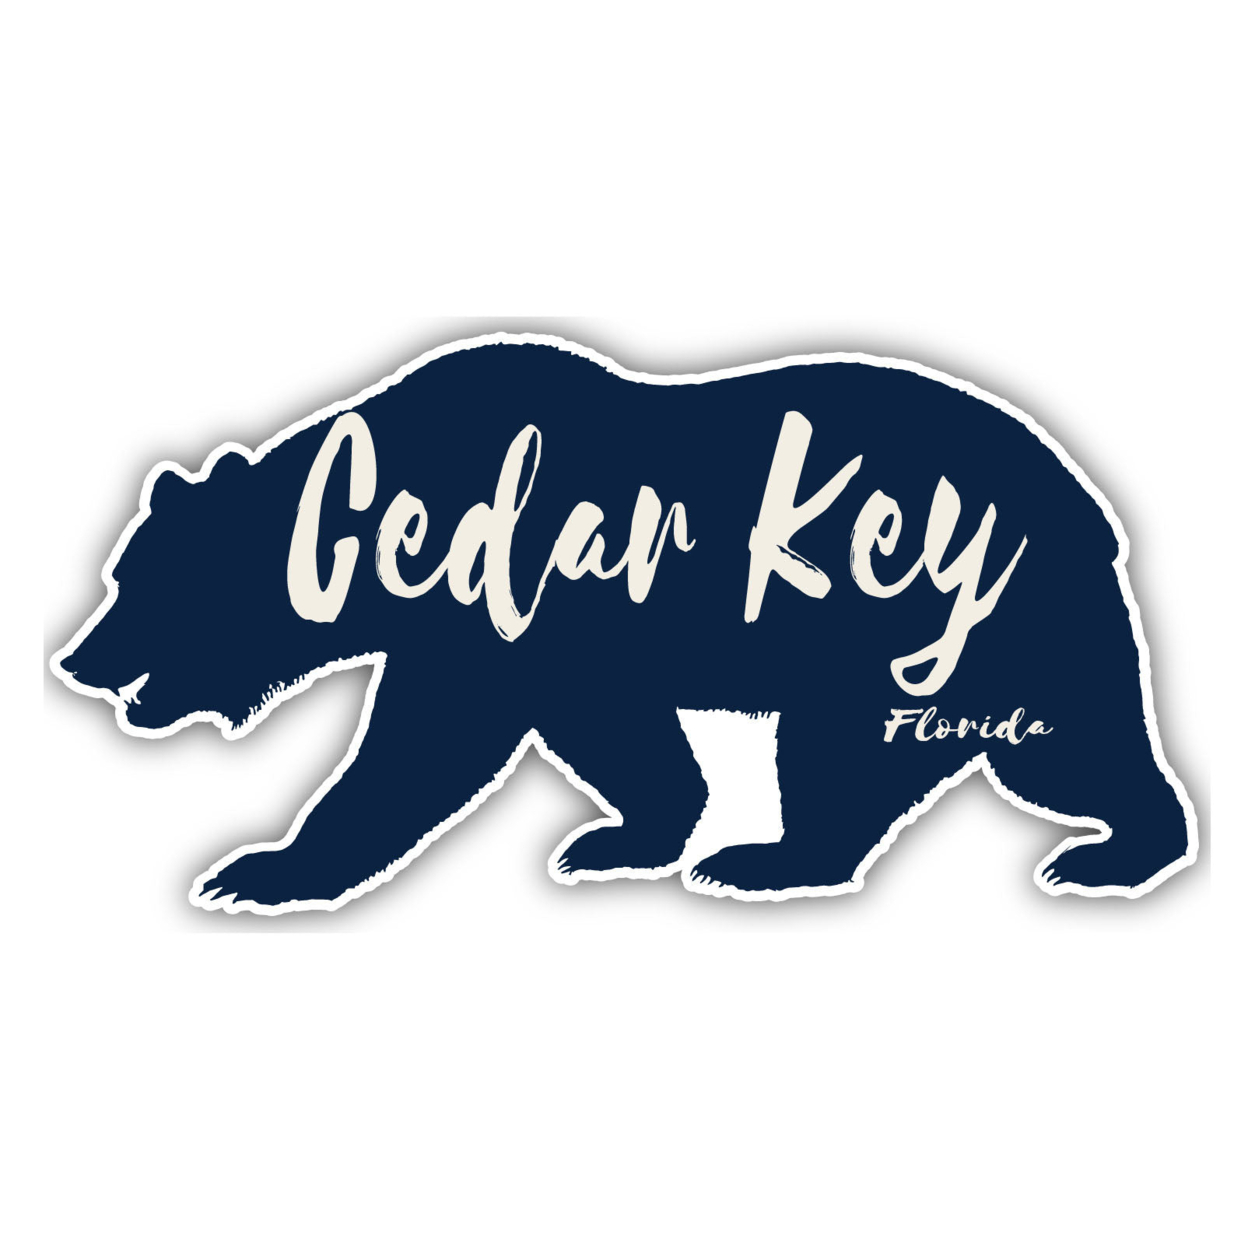 Cedar Key Florida Souvenir Decorative Stickers (Choose Theme And Size) - 4-Pack, 8-Inch, Camp Life